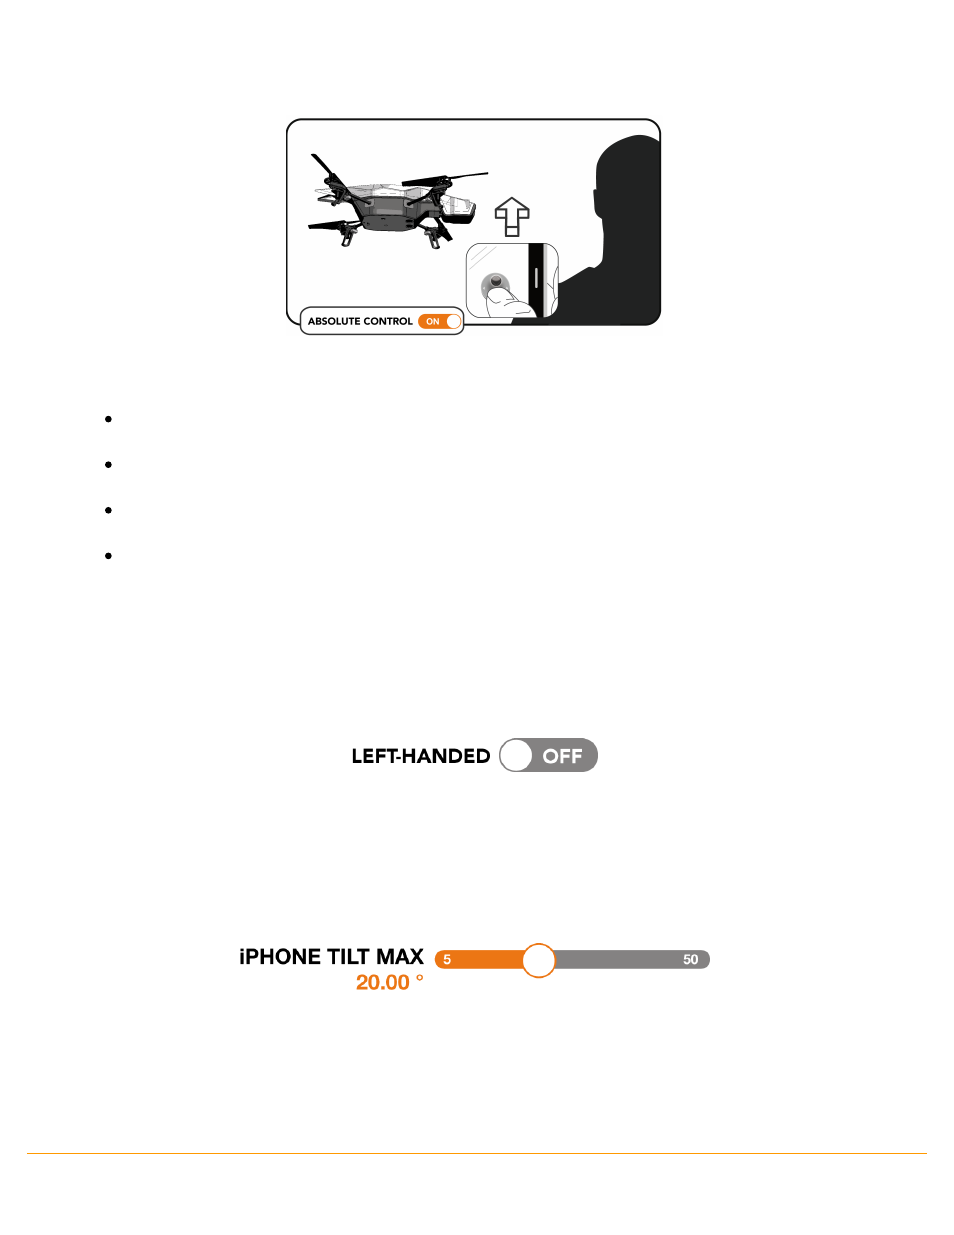 Left-handed mode, Max tilt | Parrot AR. Drone 2.0 User Manual | Page 31 / 39